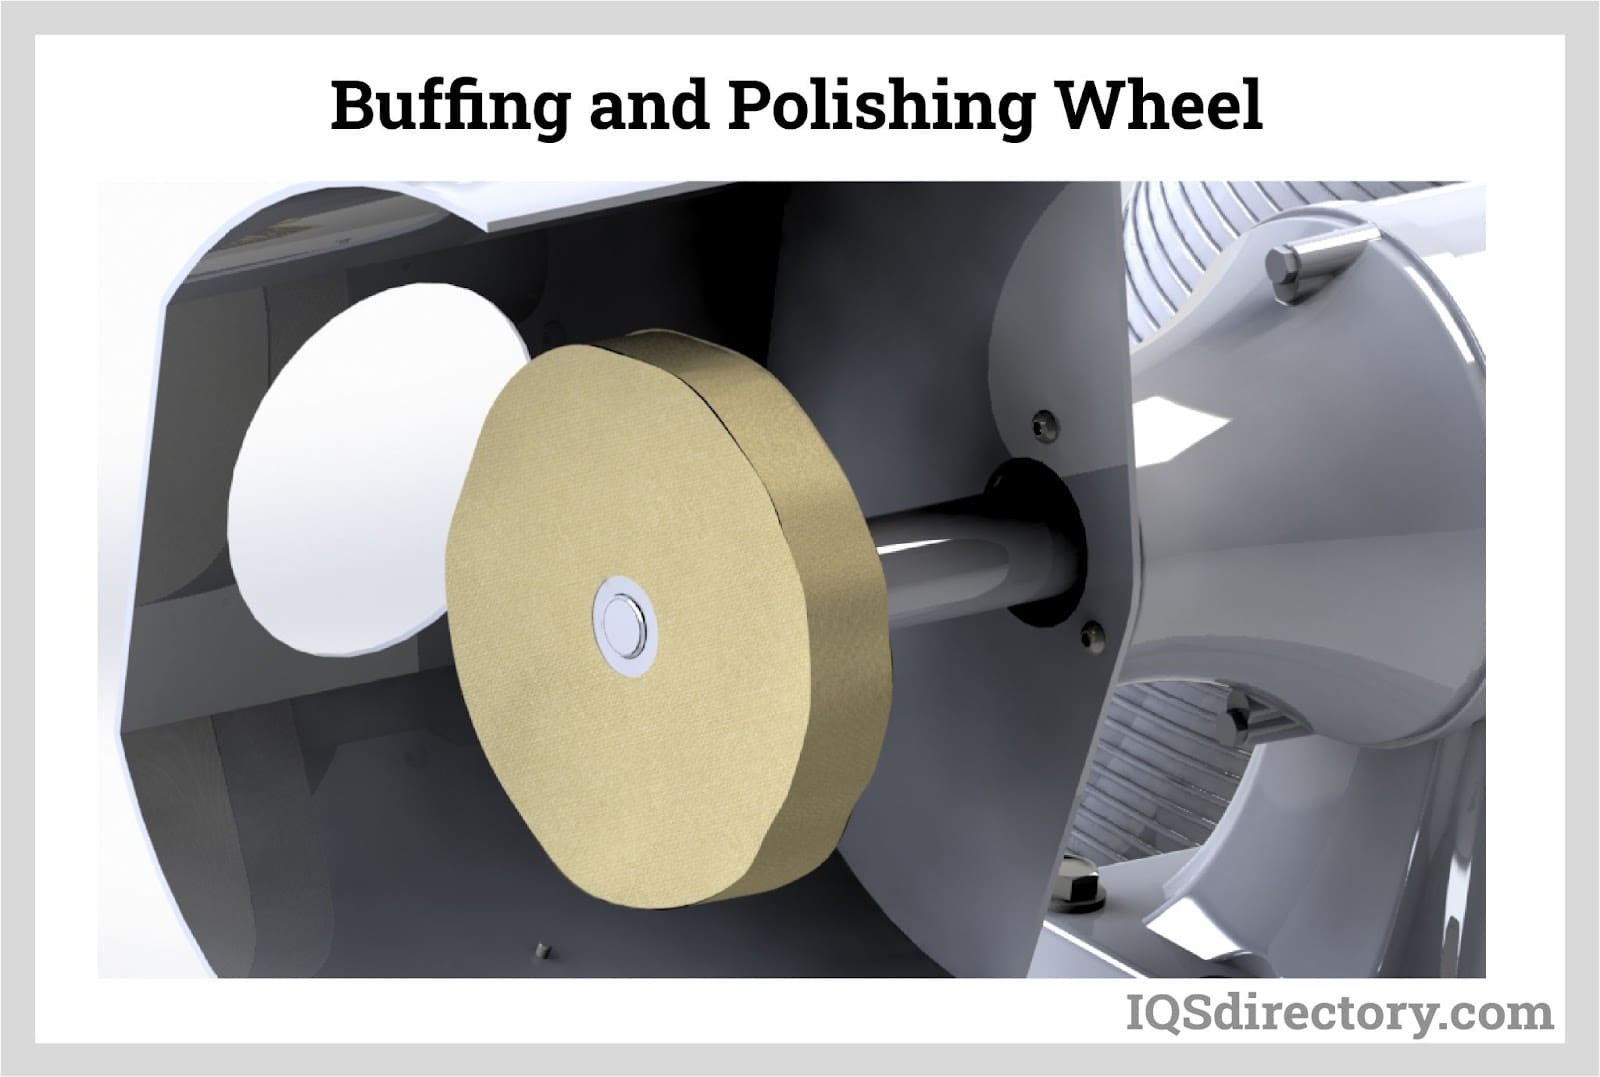 Buffing and Polishing Wheel